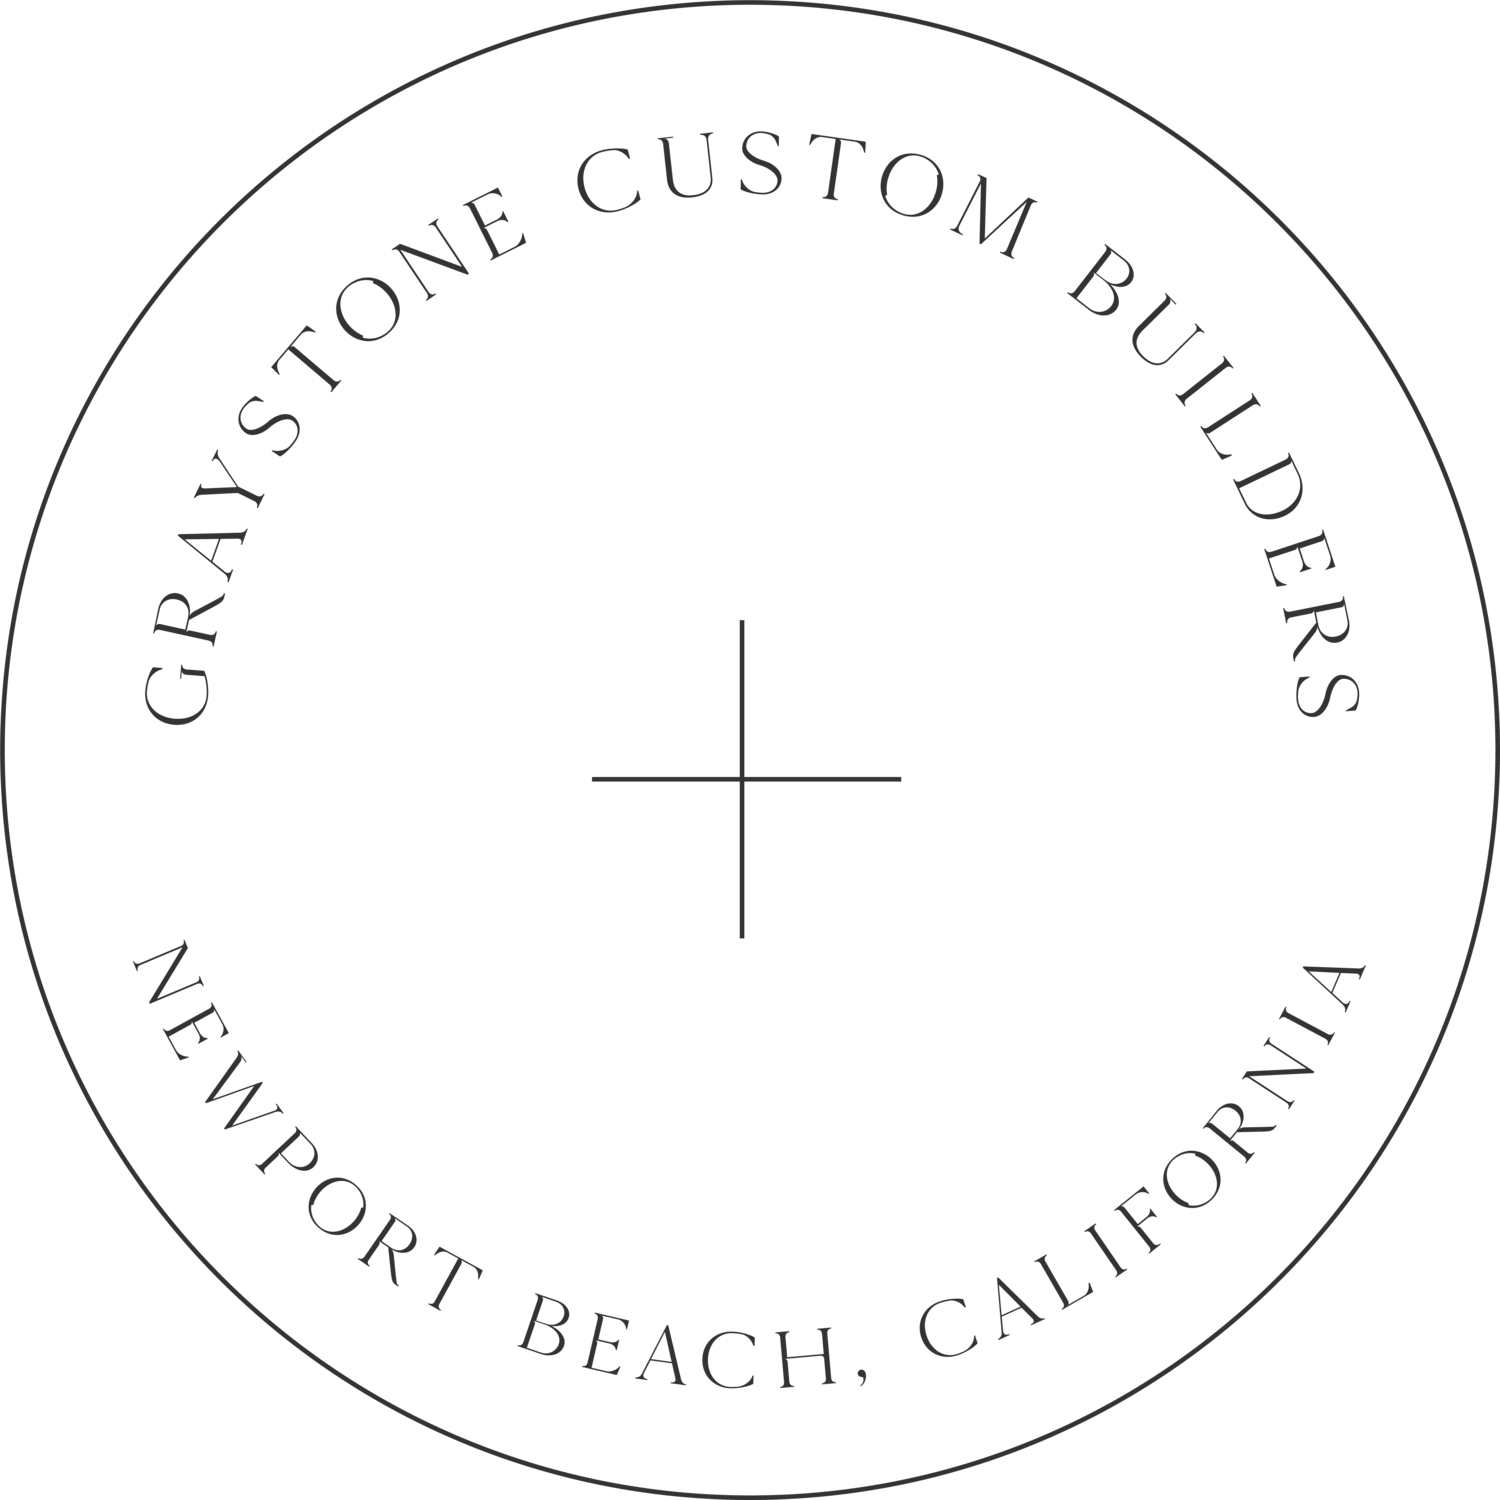 Graystone Custom Builders